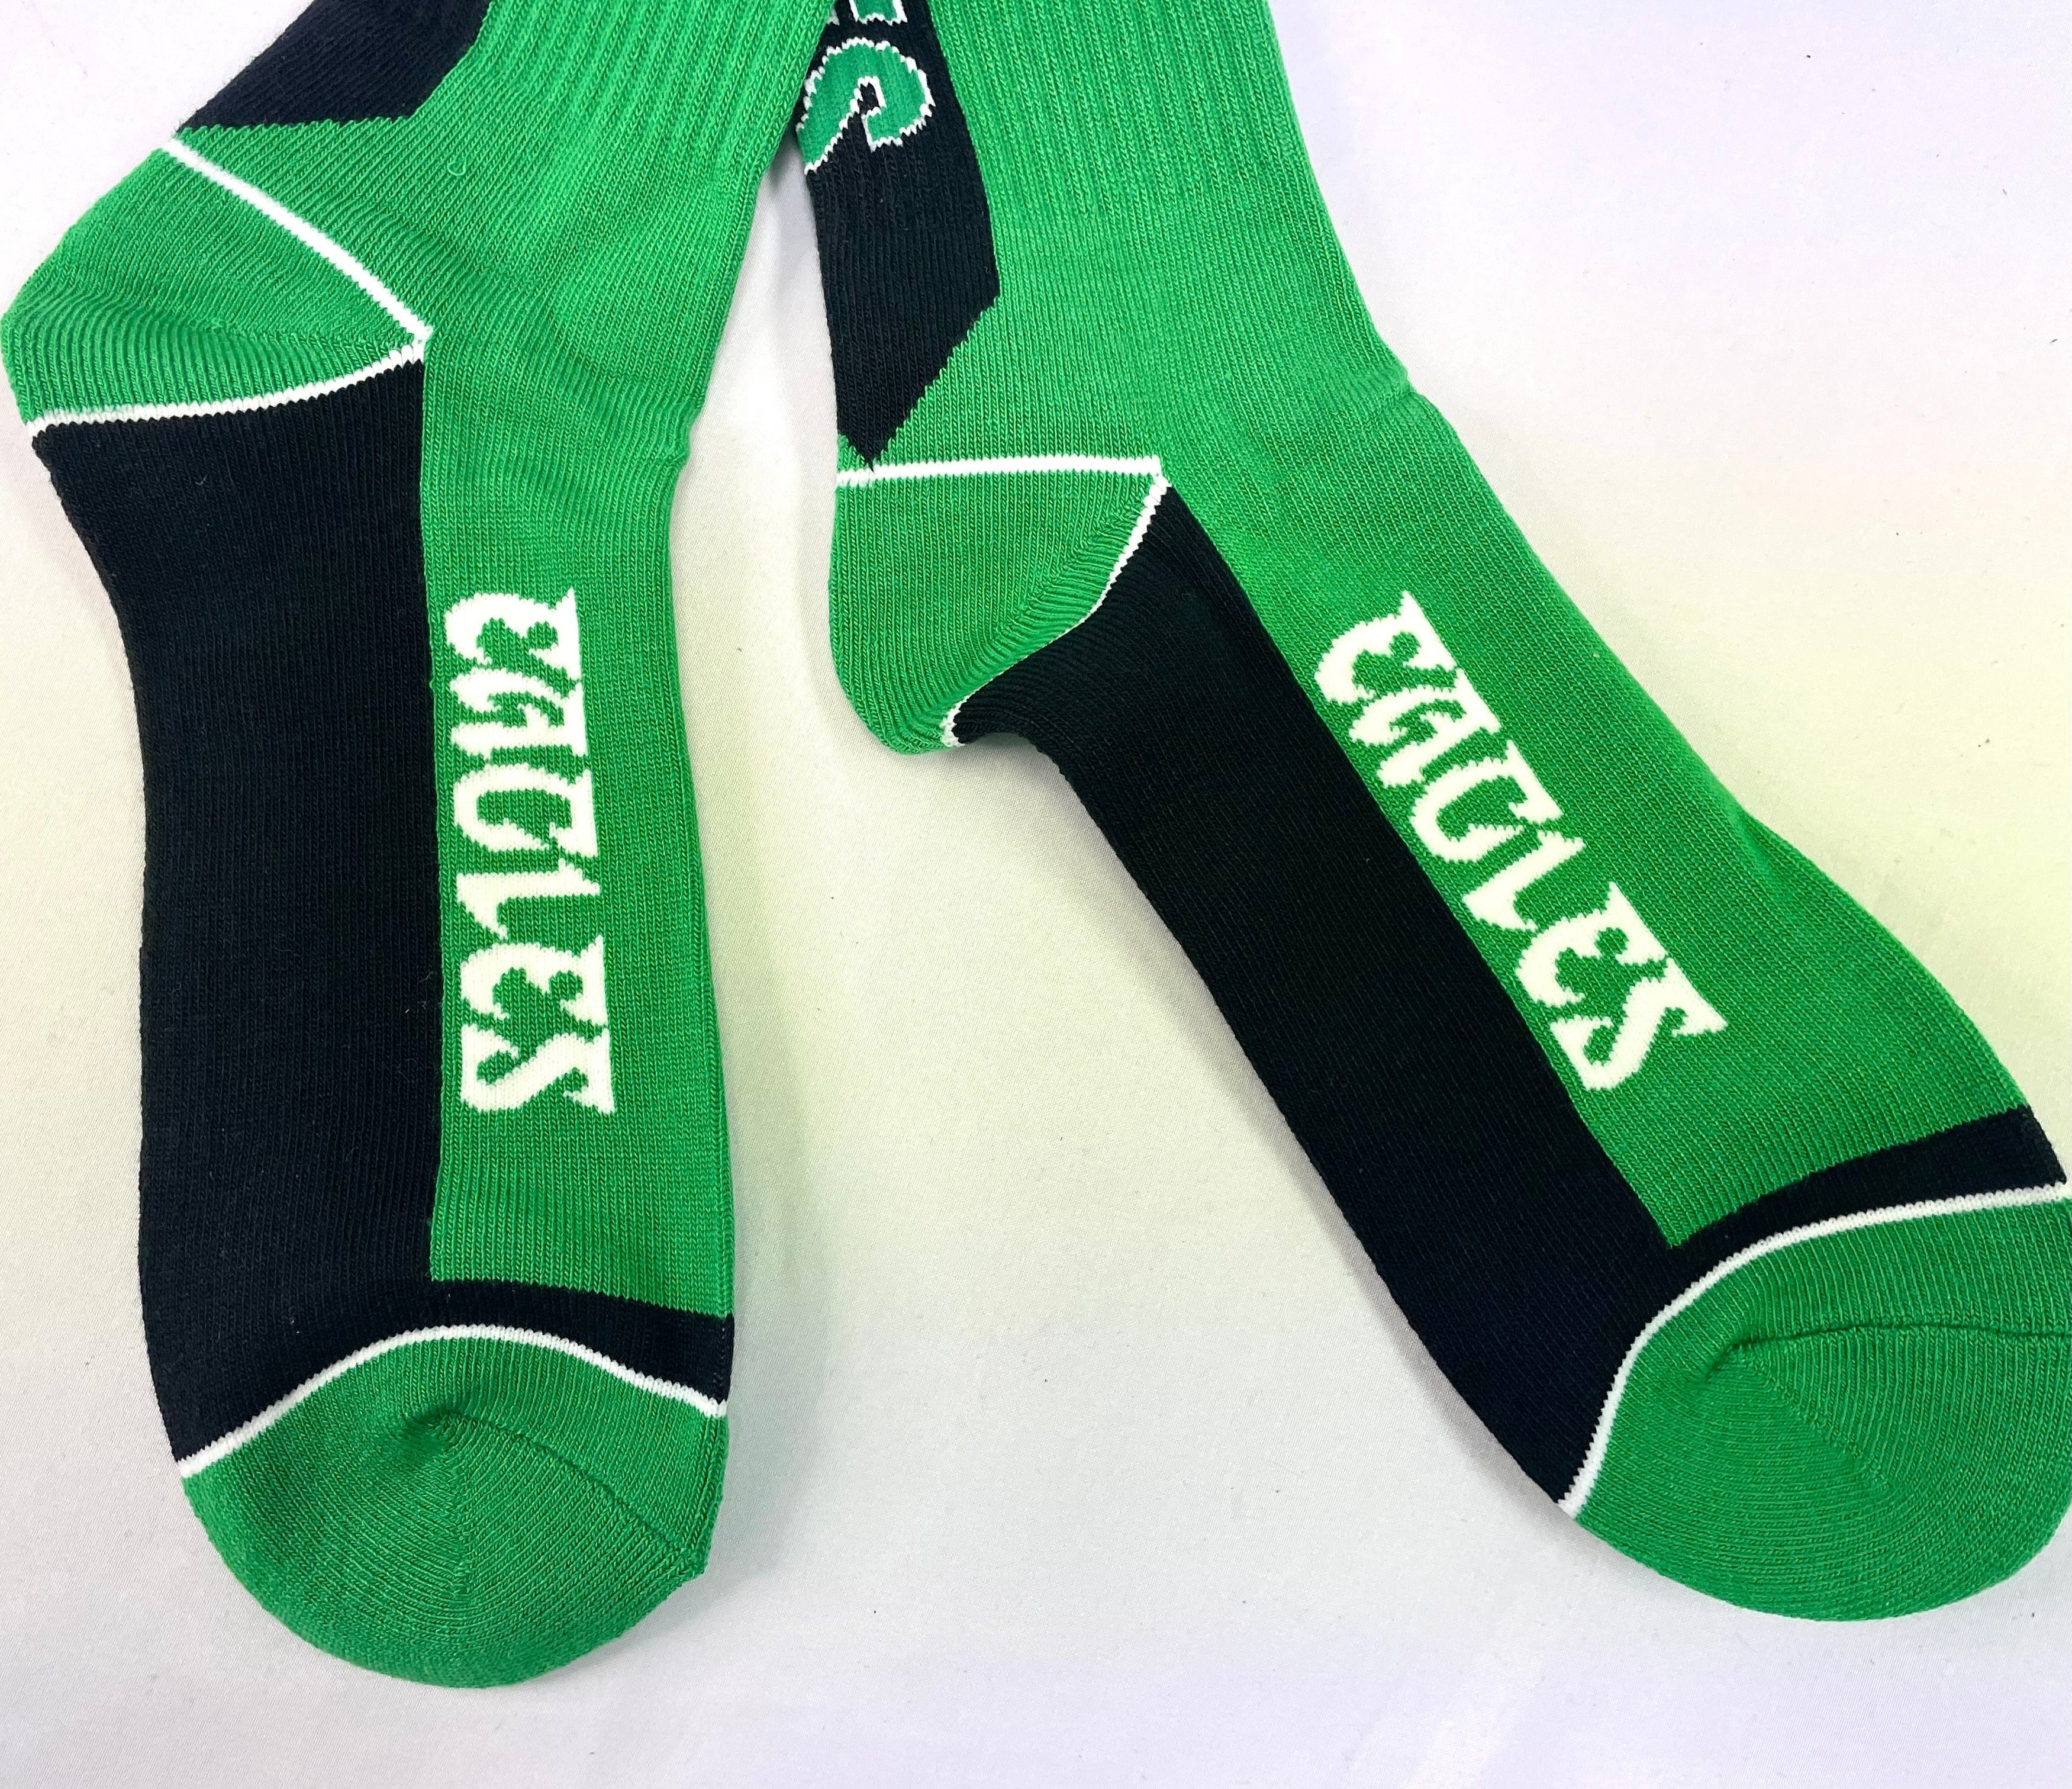 Philadelphia Eagles Retro Socks - Large